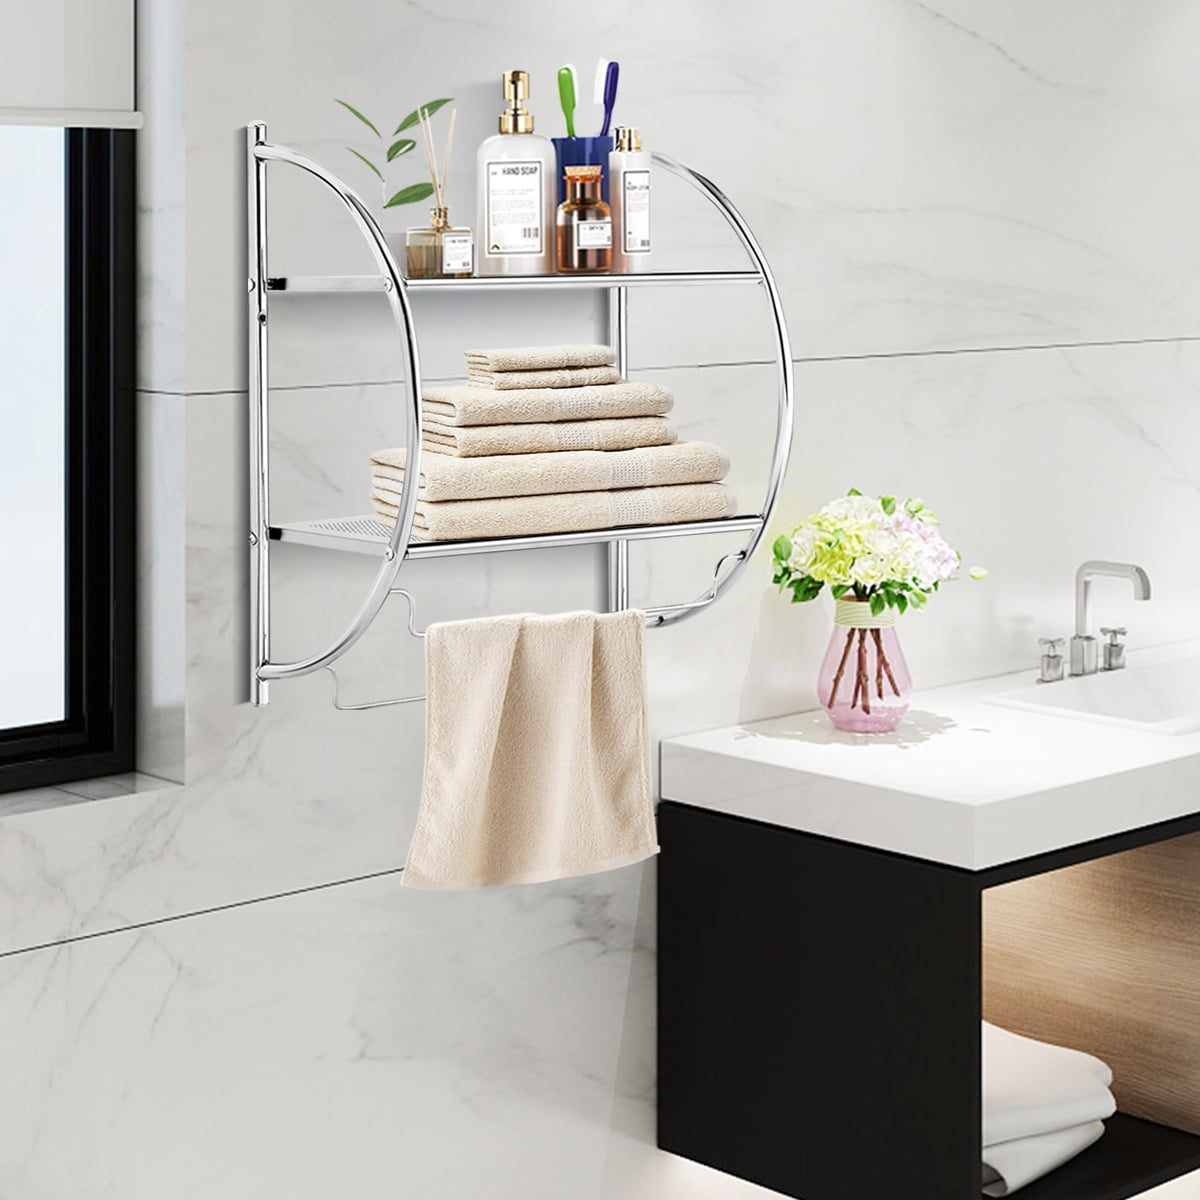 2 Tiers Self Adhesive Wall Mounted Bathroom Shelf Rack Organiser Towel Rail